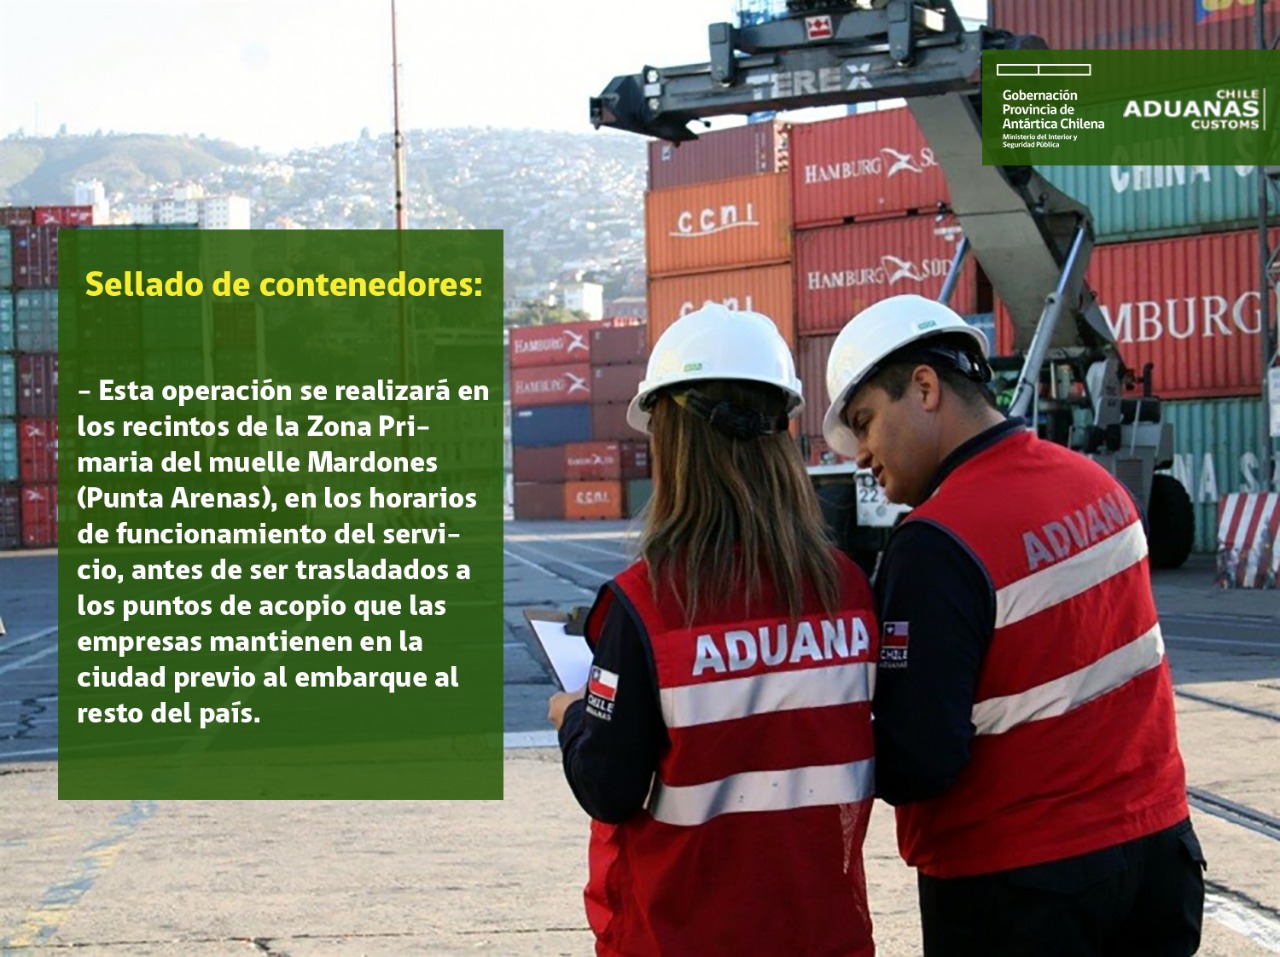 Aduana establece nuevos procedimientos para tramitación e ingreso de mercaderías a Magallanes